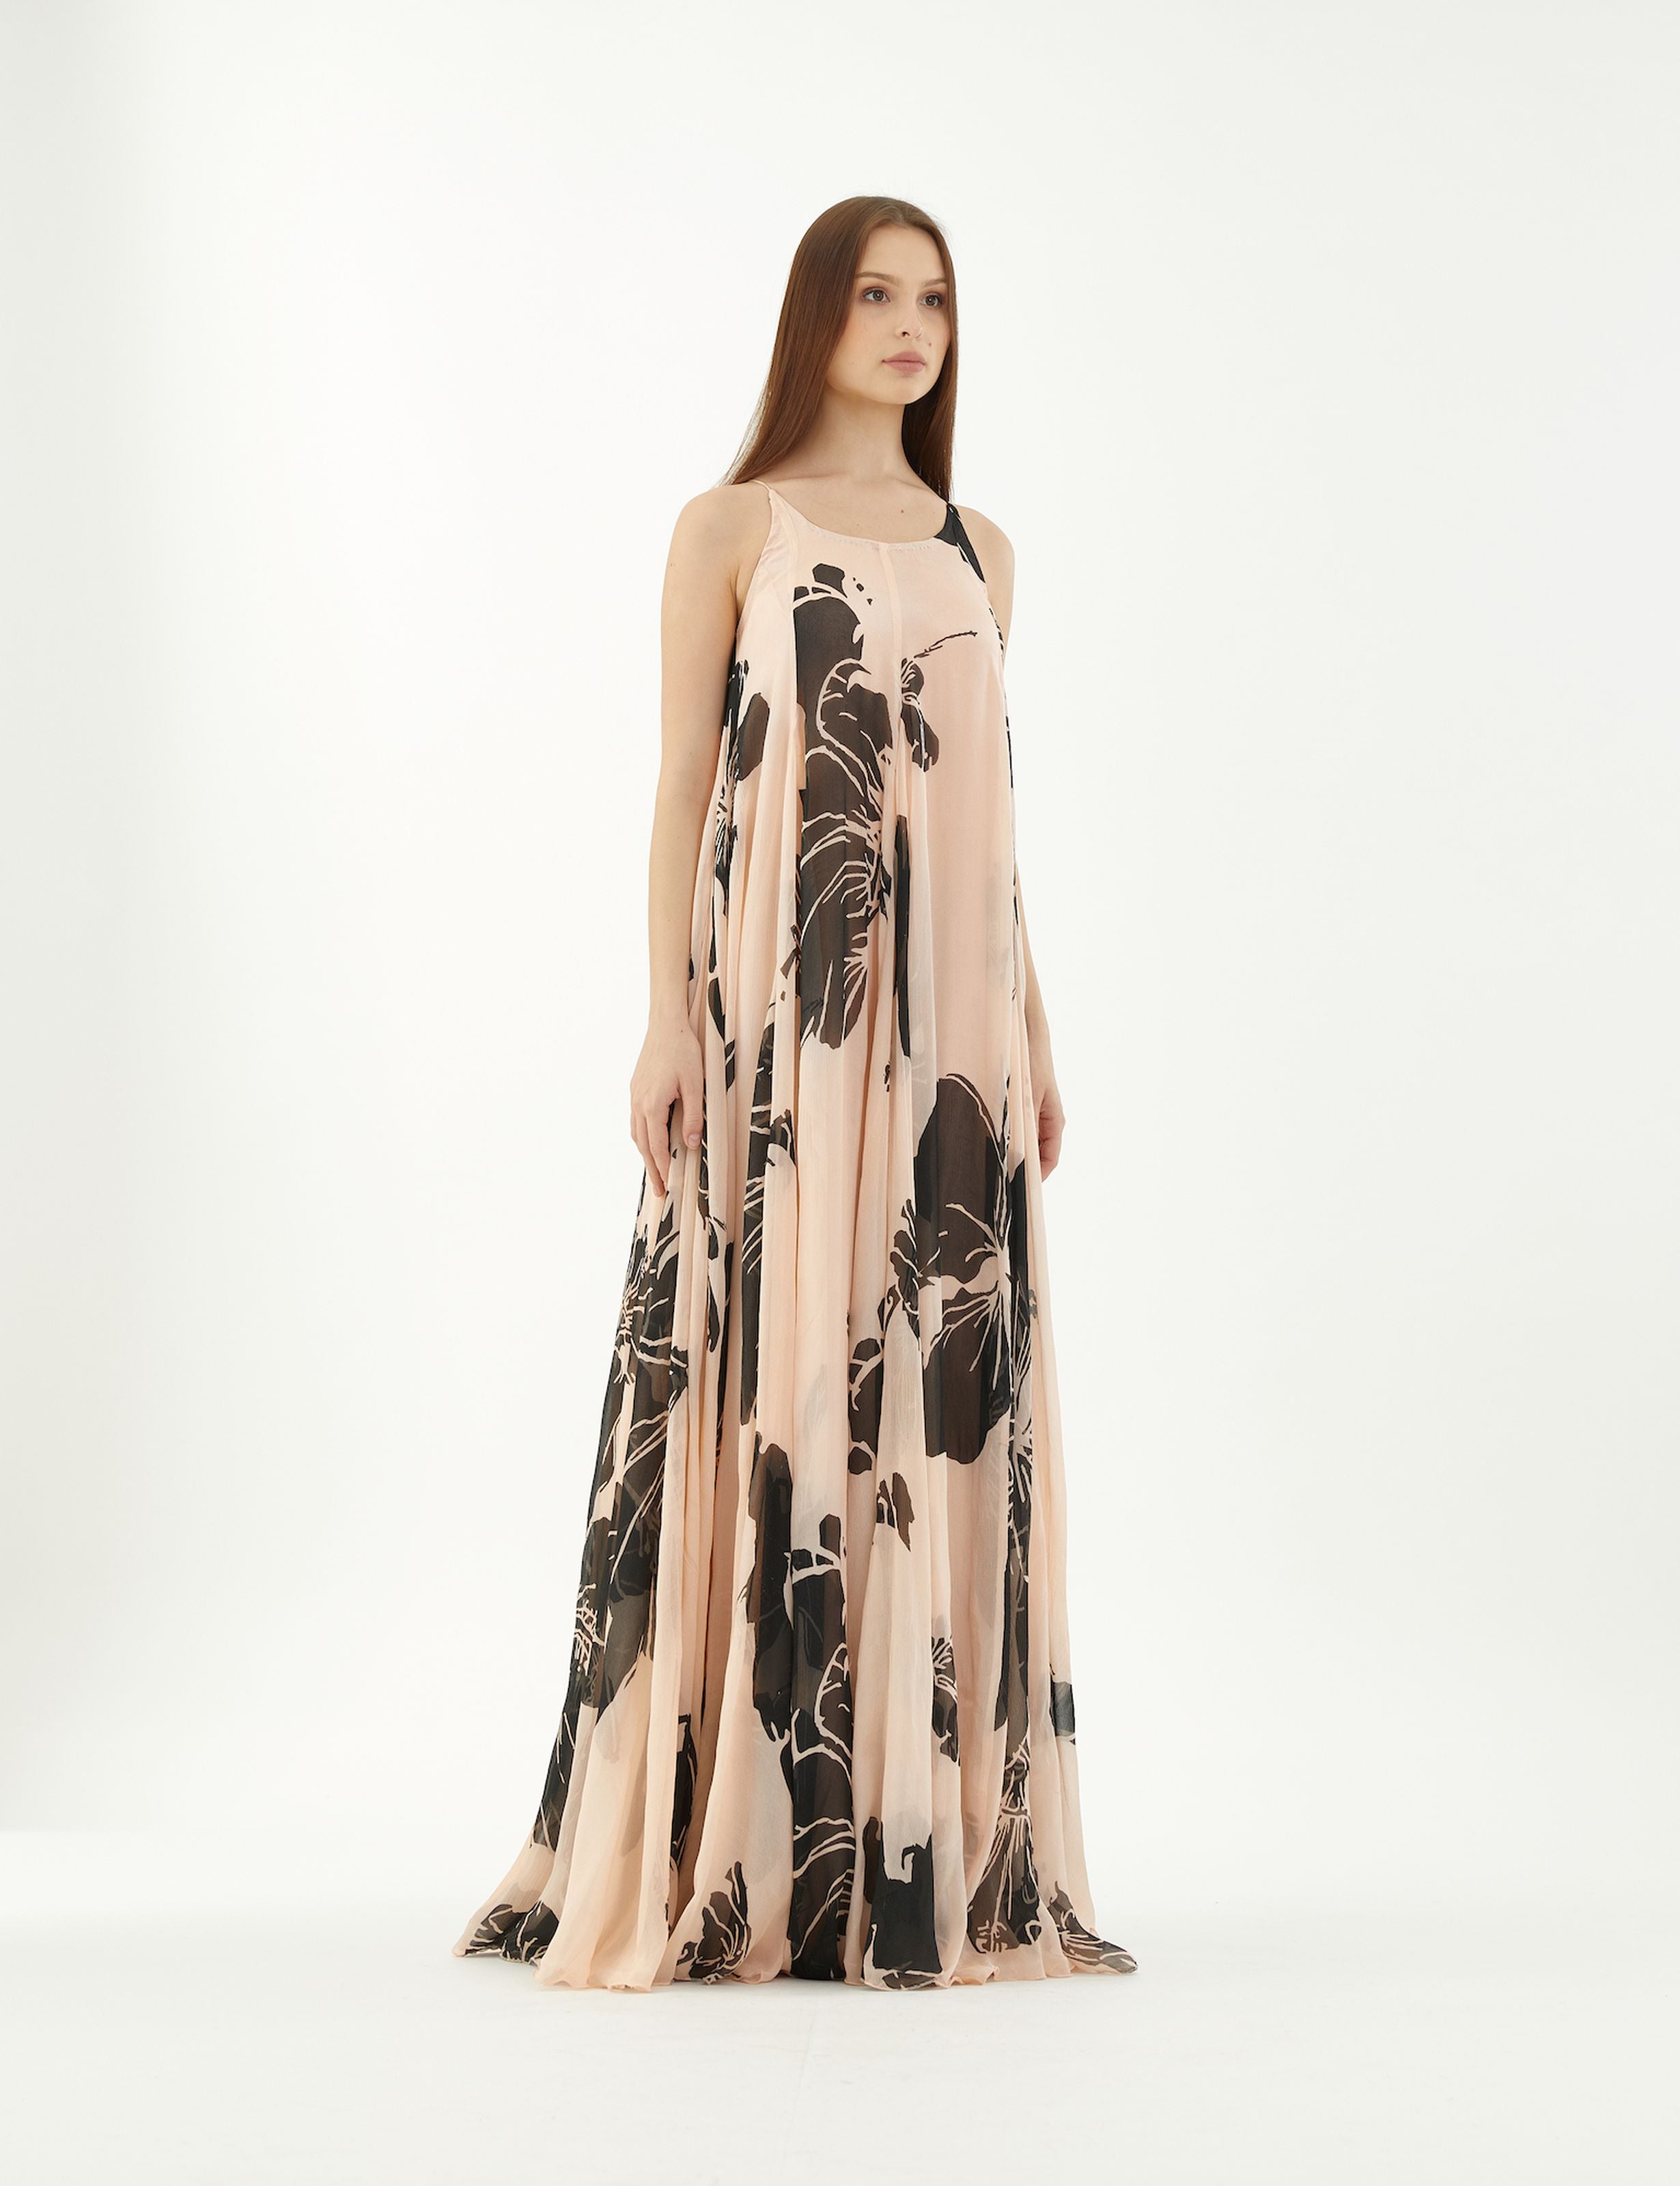 Sleeveless Black Floral Maxi Dress | LOVESTITCH